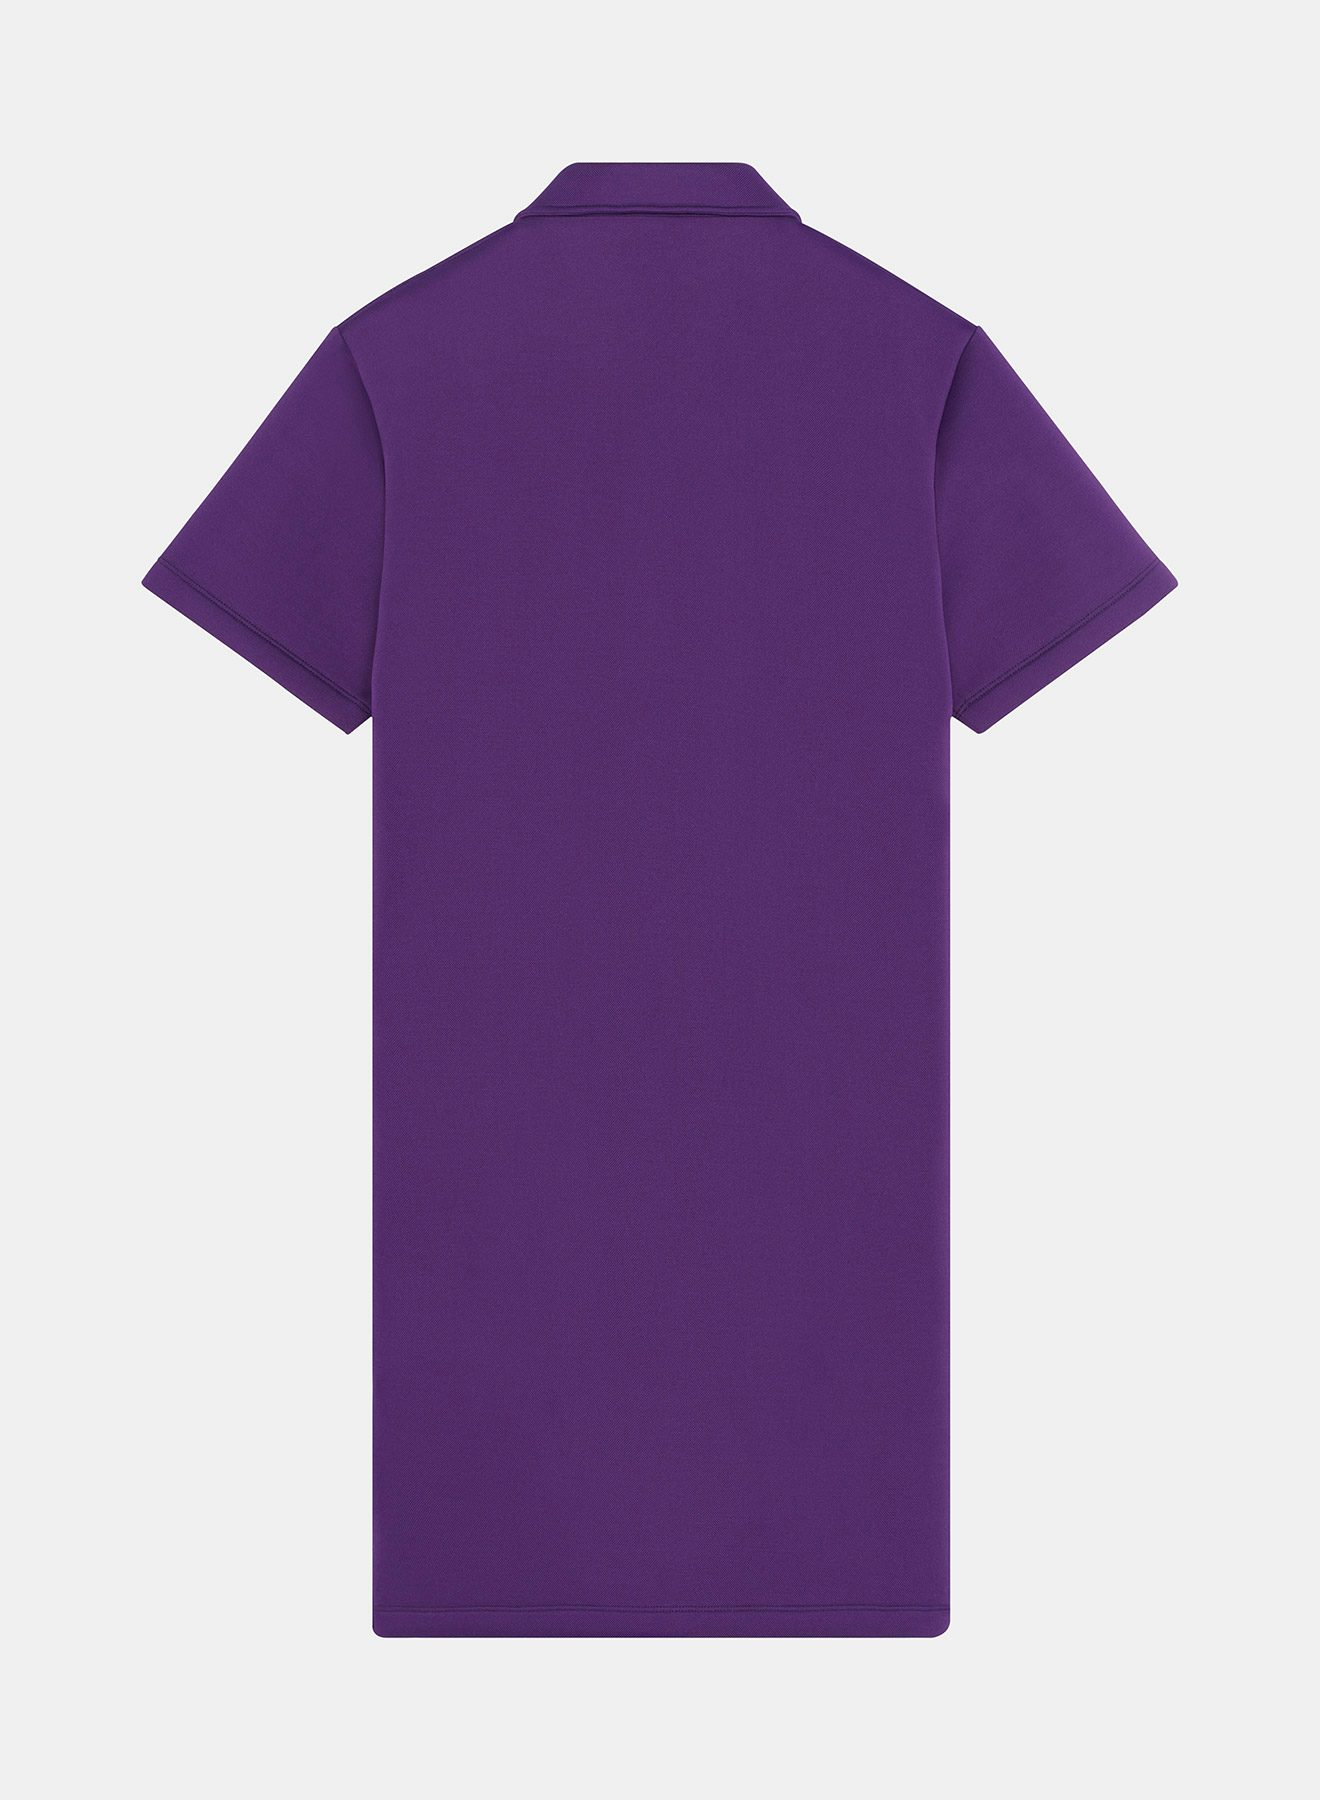 Polo dress Purple - Nina Ricci